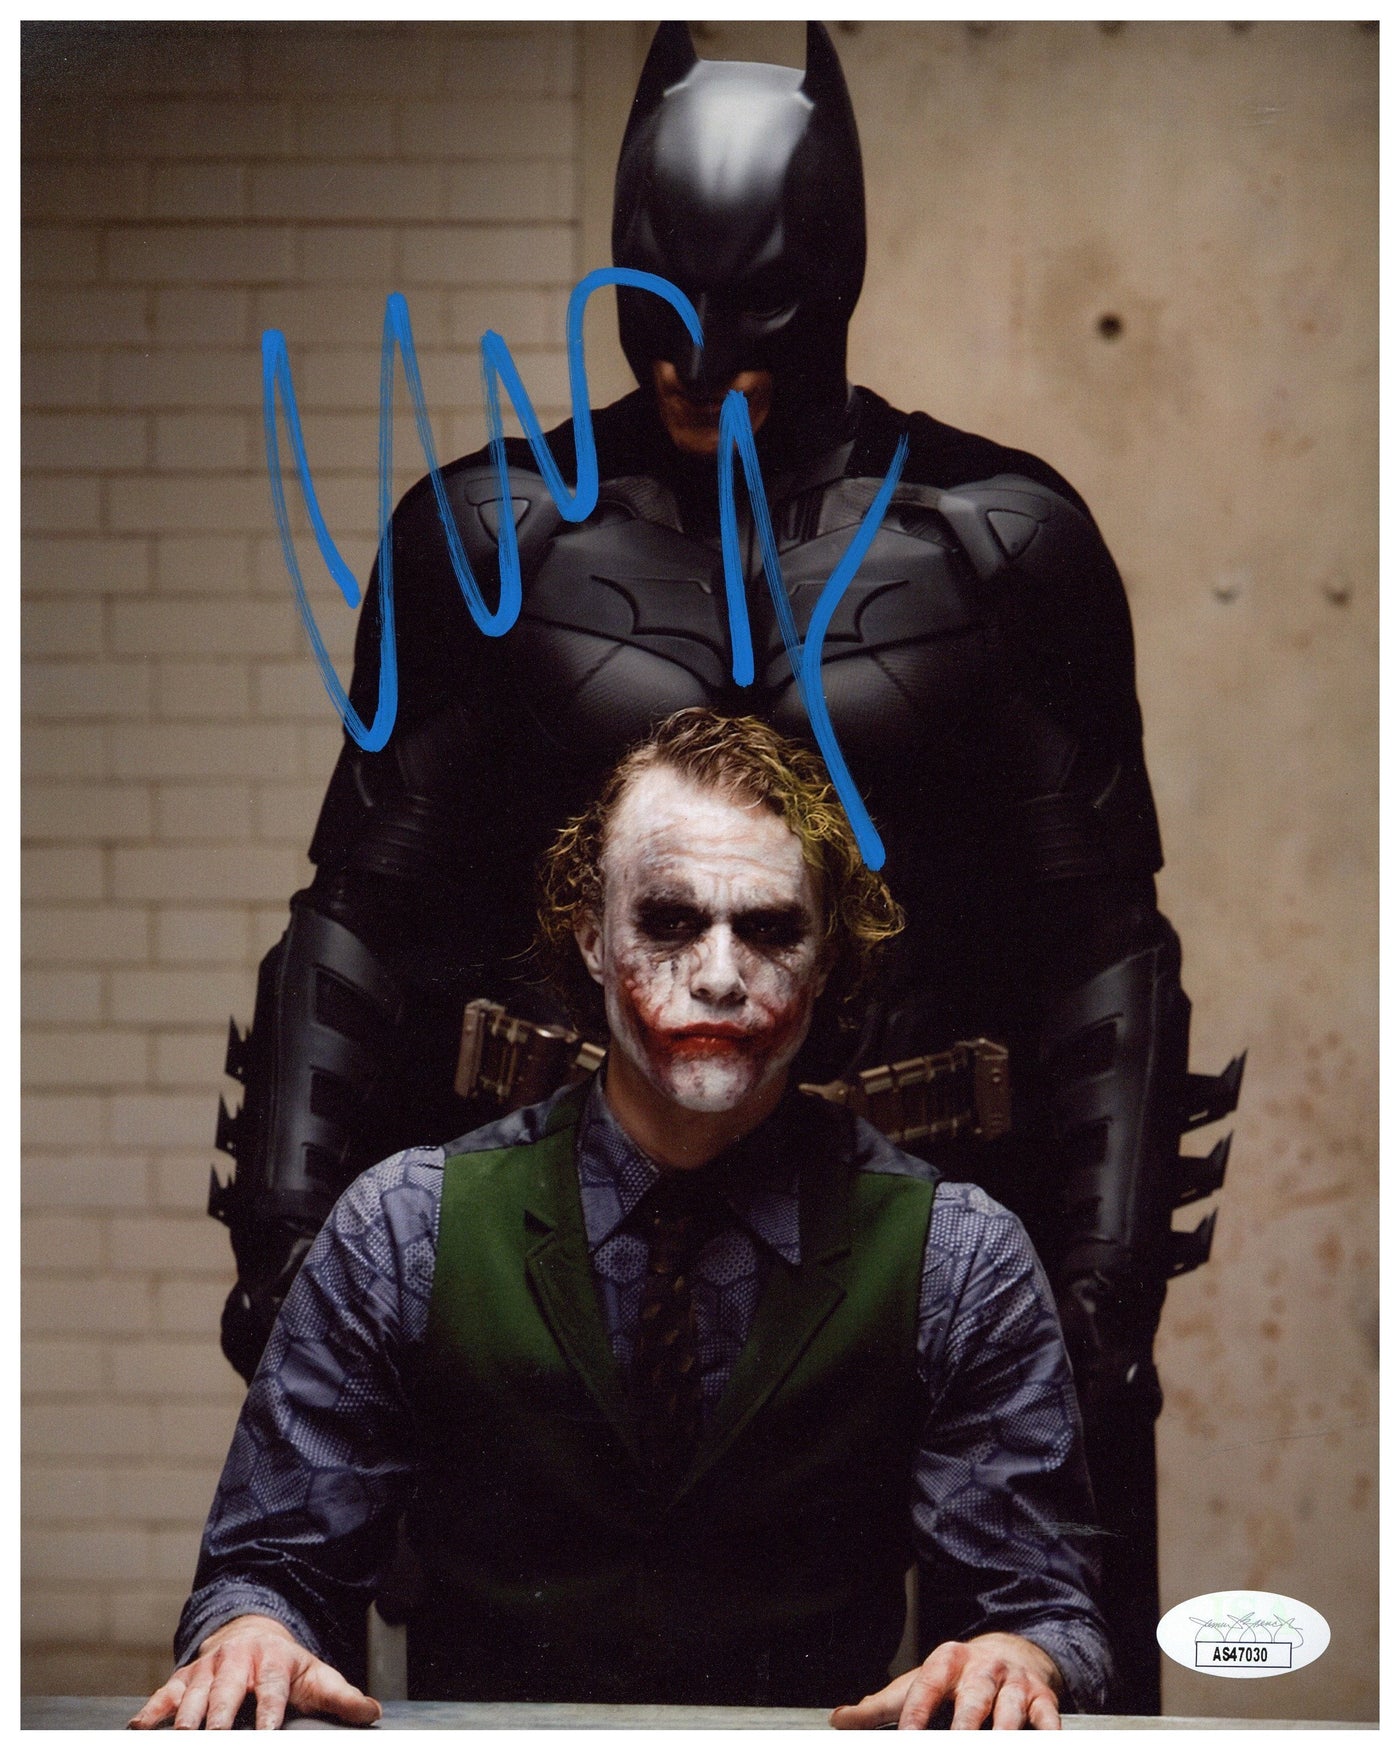 Christian Bale Signed 8x10 Photo The Dark Knight Batman Autographed JSA COA #2